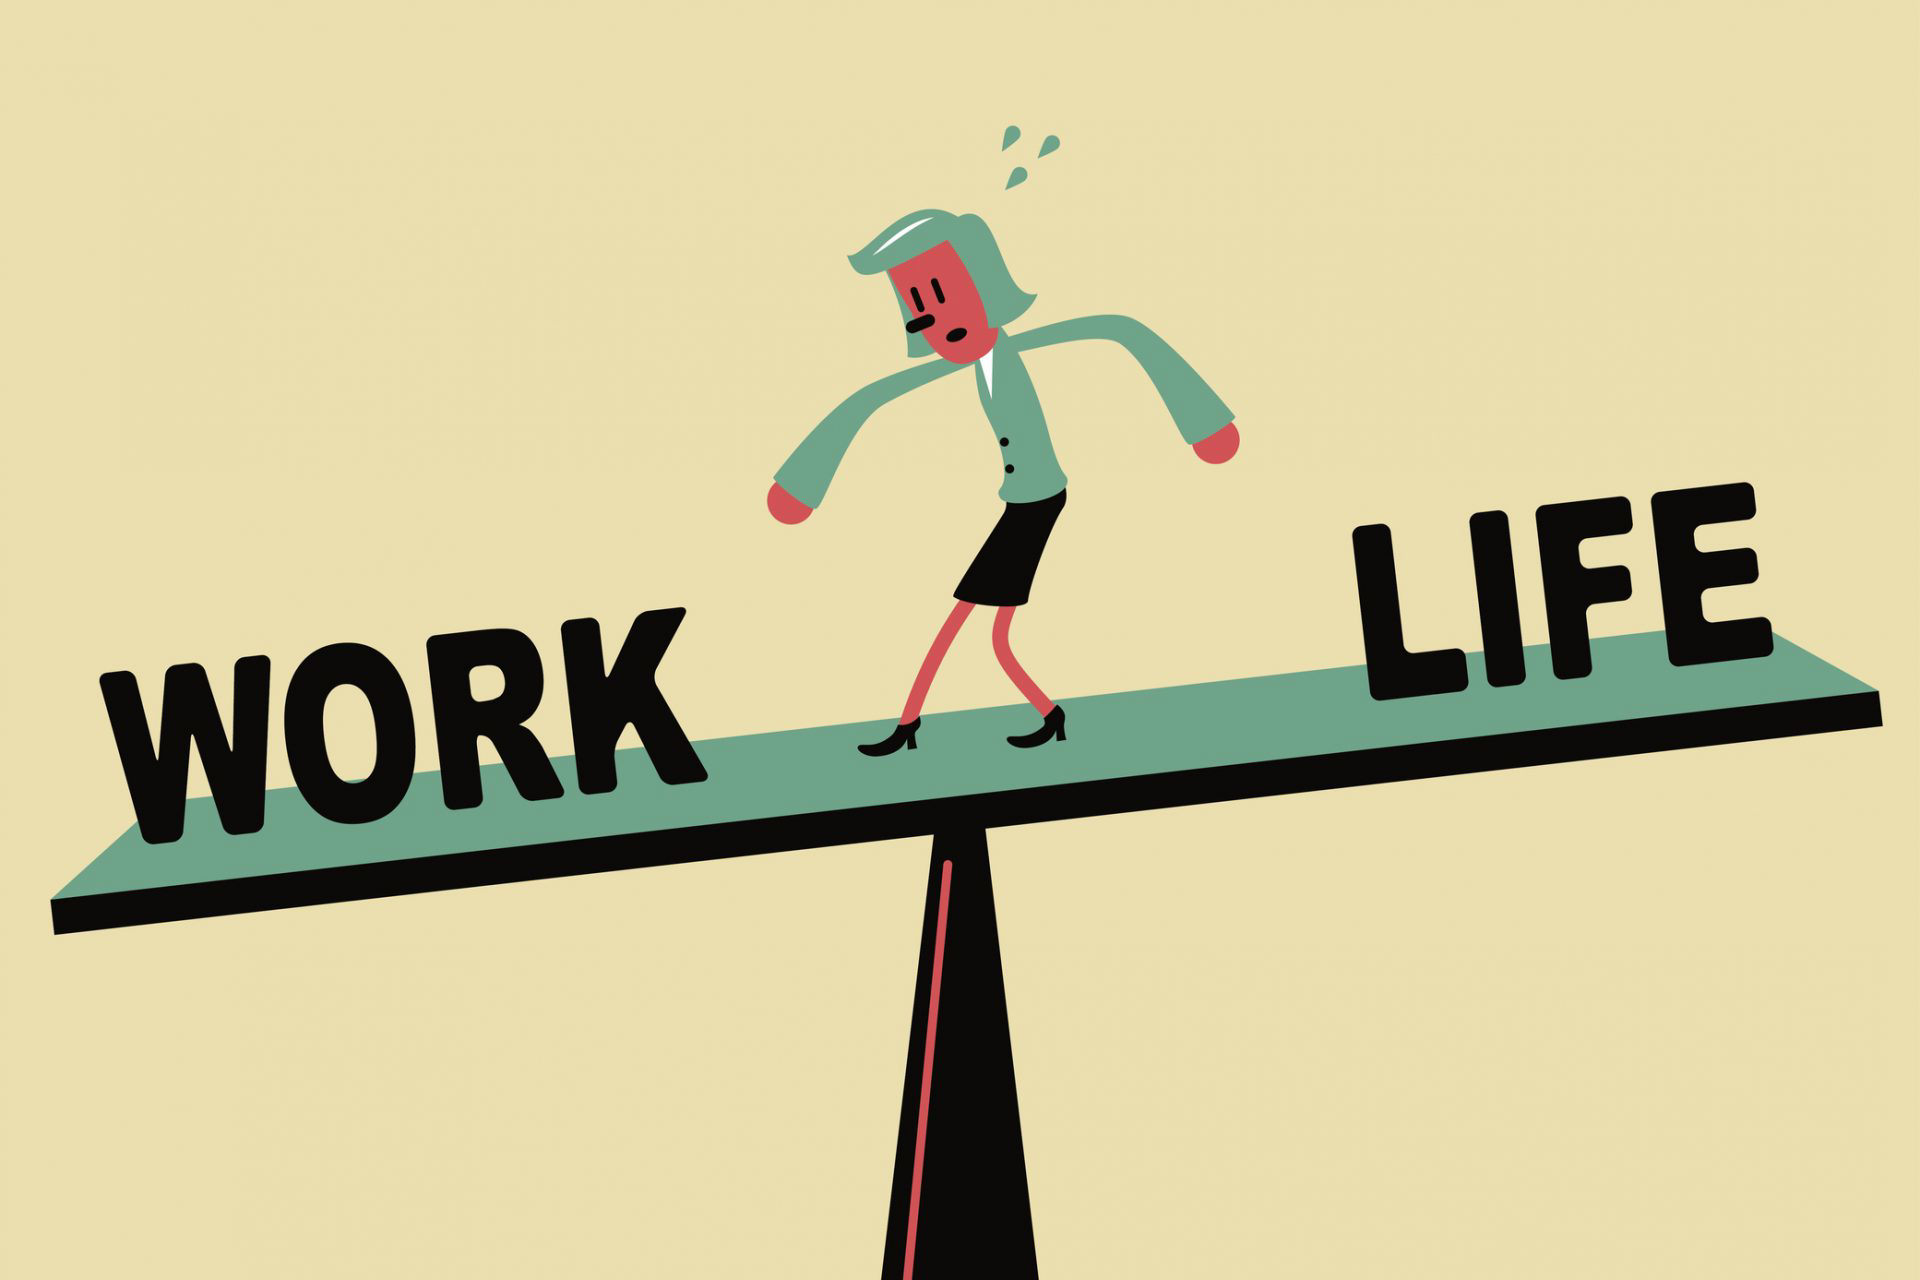 Work world life. Work-Life Balance. Work Life Balance картинки. Ворк лайф баланс. Баланс между работой и отдыхом.